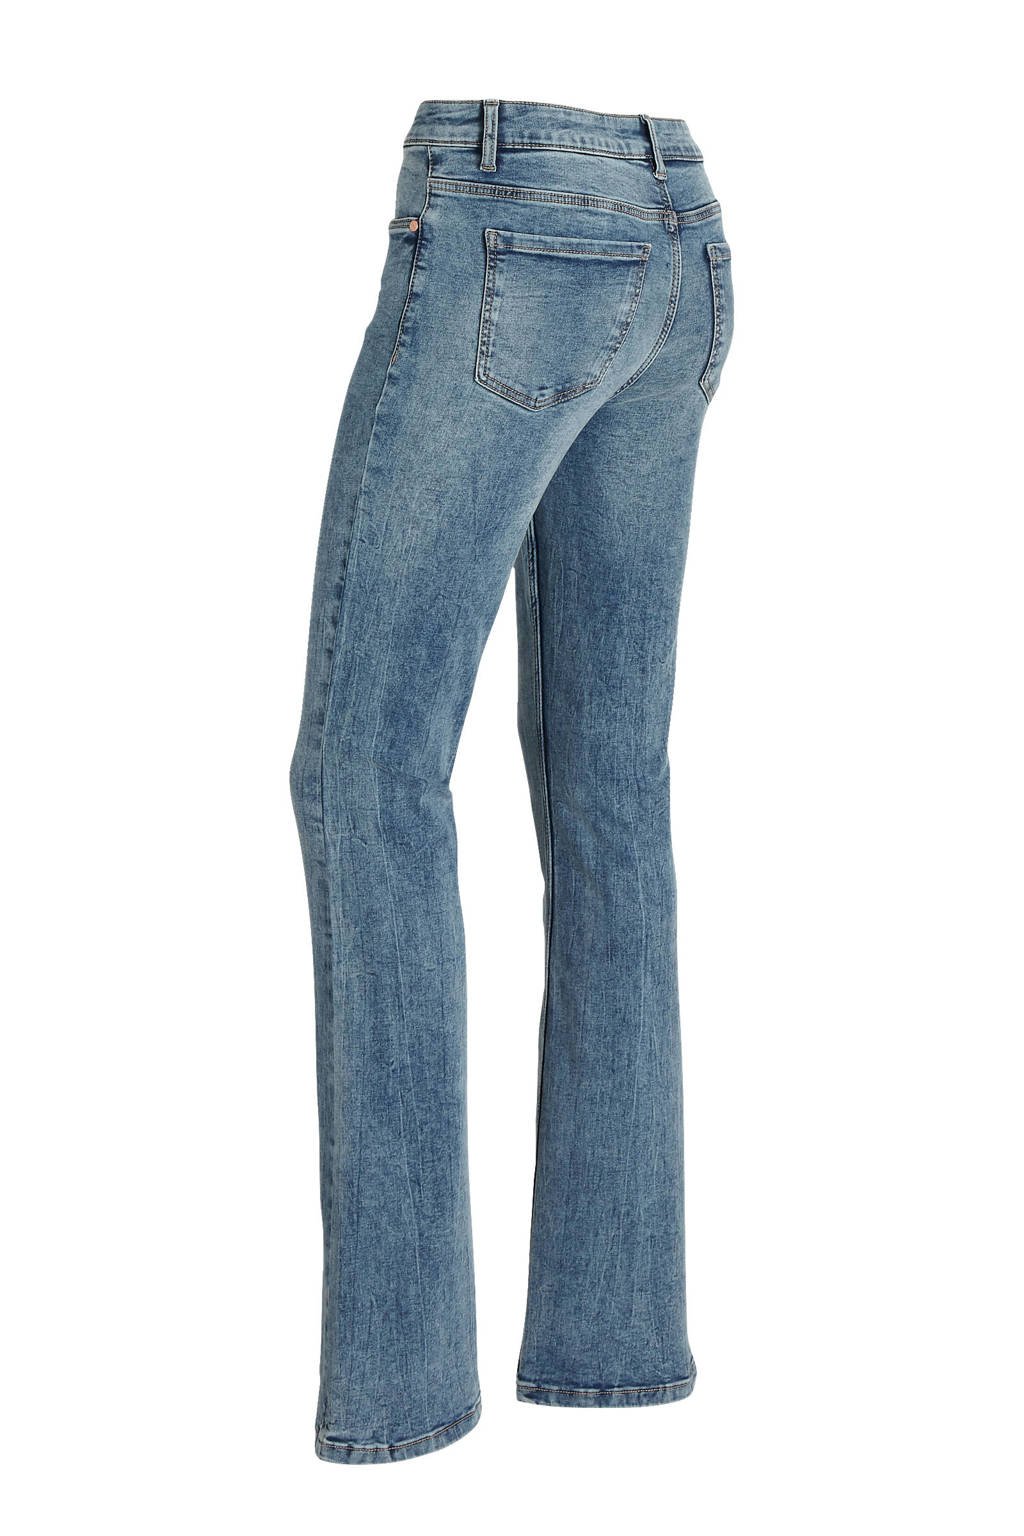 Waakzaam opleggen ontspannen anytime lengtemaat 30 mid rise flared jeans lichtblauw | wehkamp